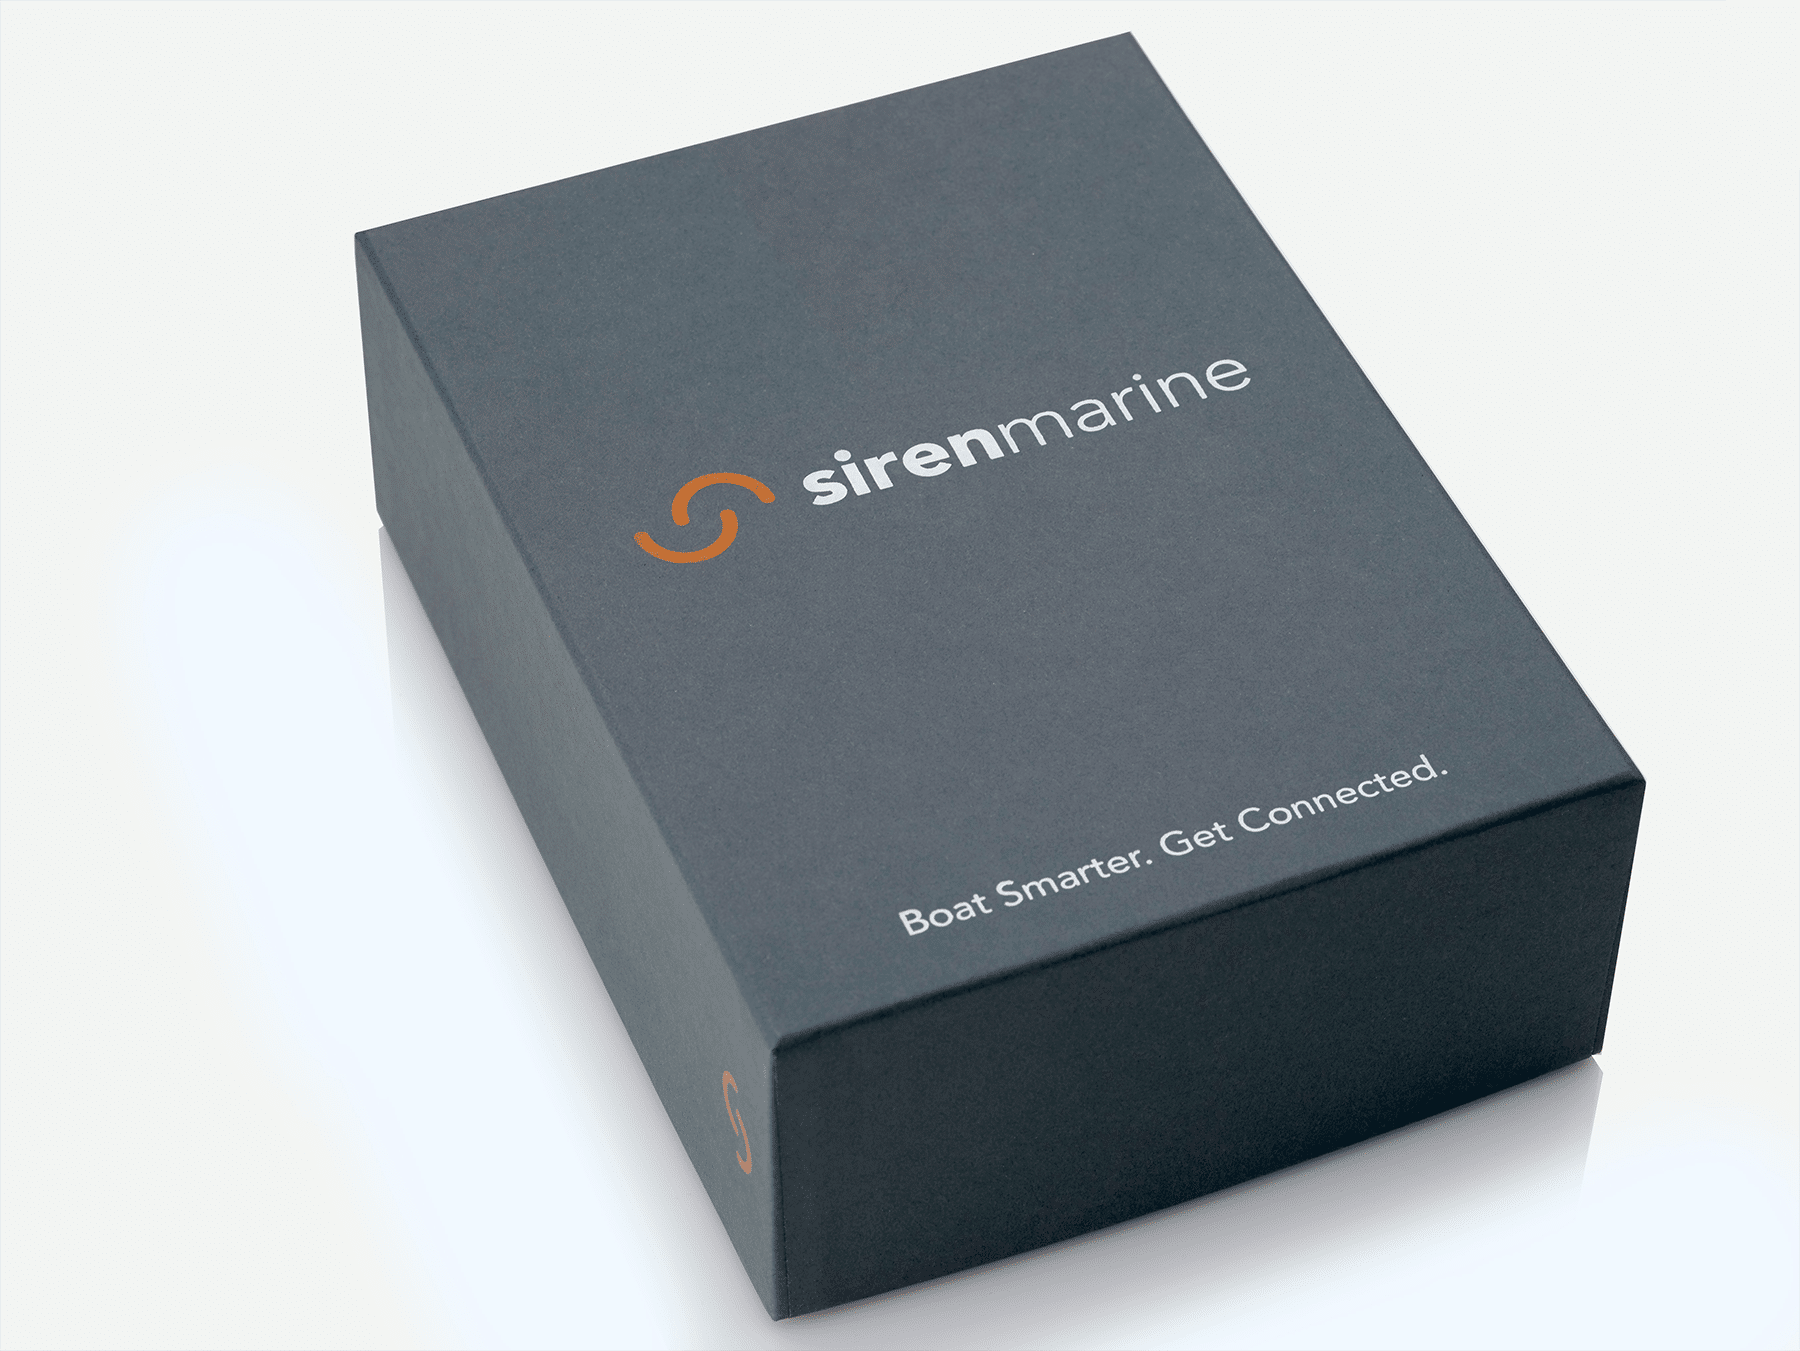 siren marine, packaging design, electronics packaging, custom box, premium packaging 